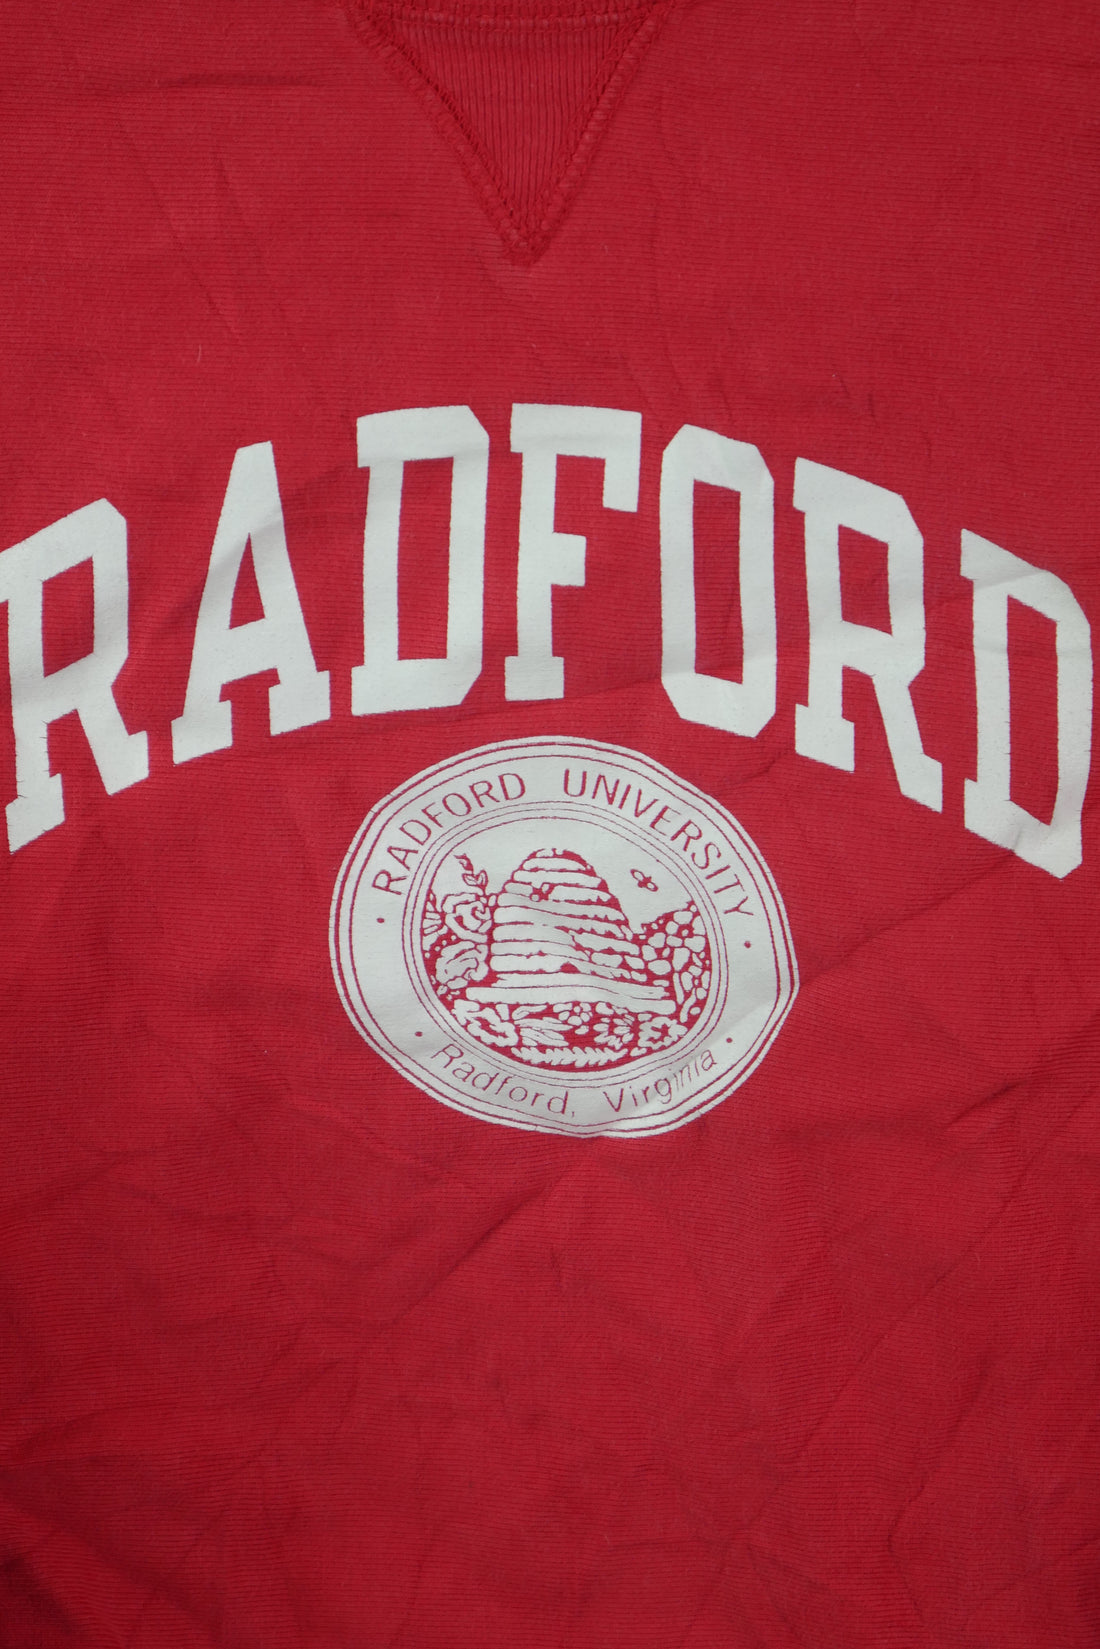 The Champion Radford University Graphic Sweatshirt (XS)